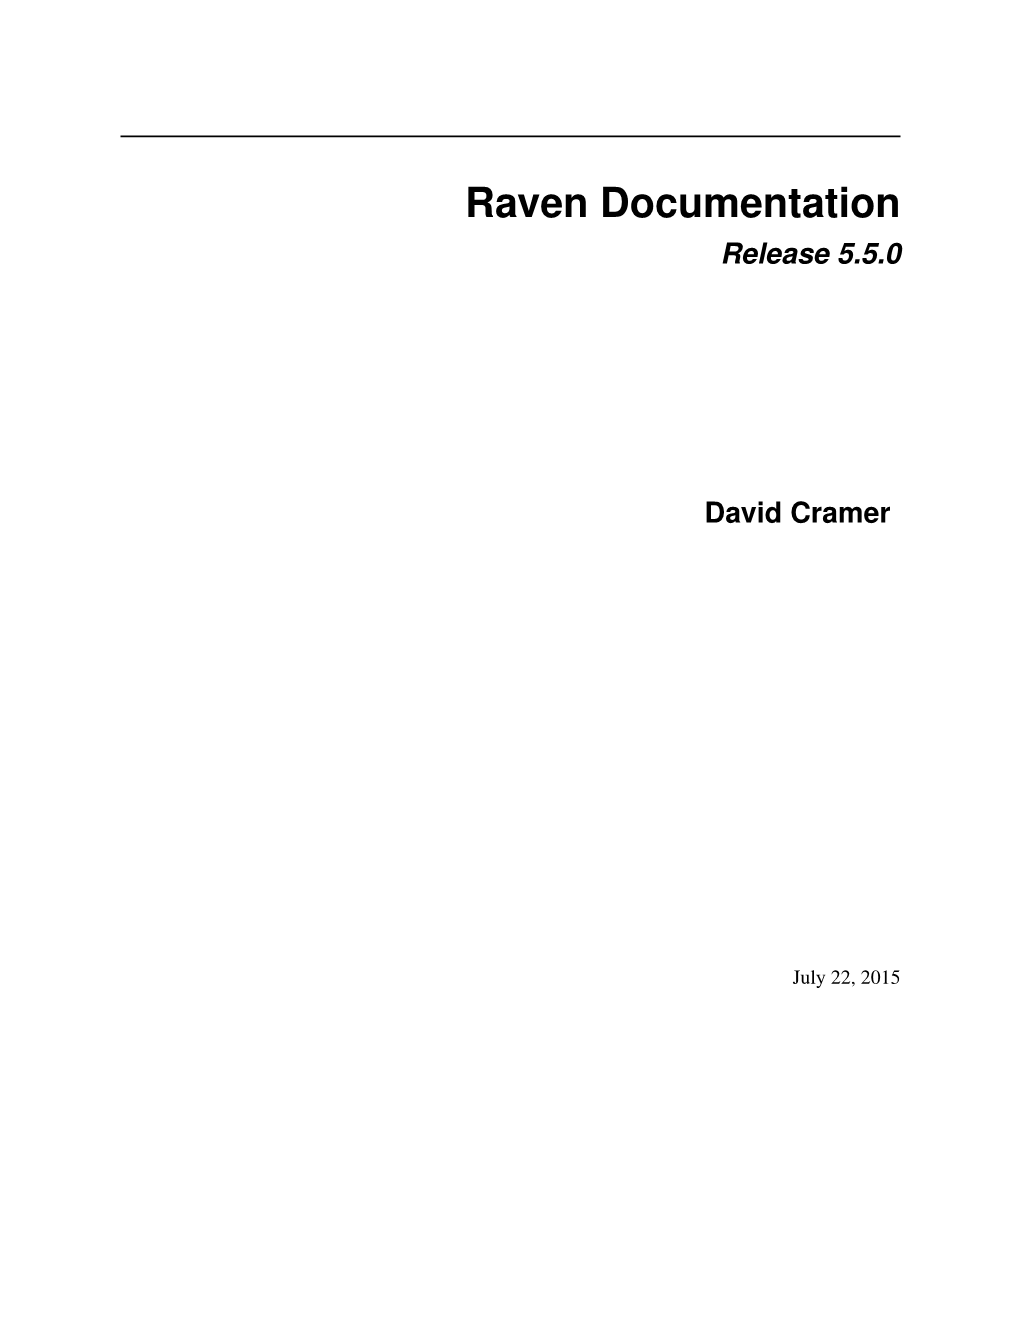 Raven Documentation Release 5.5.0